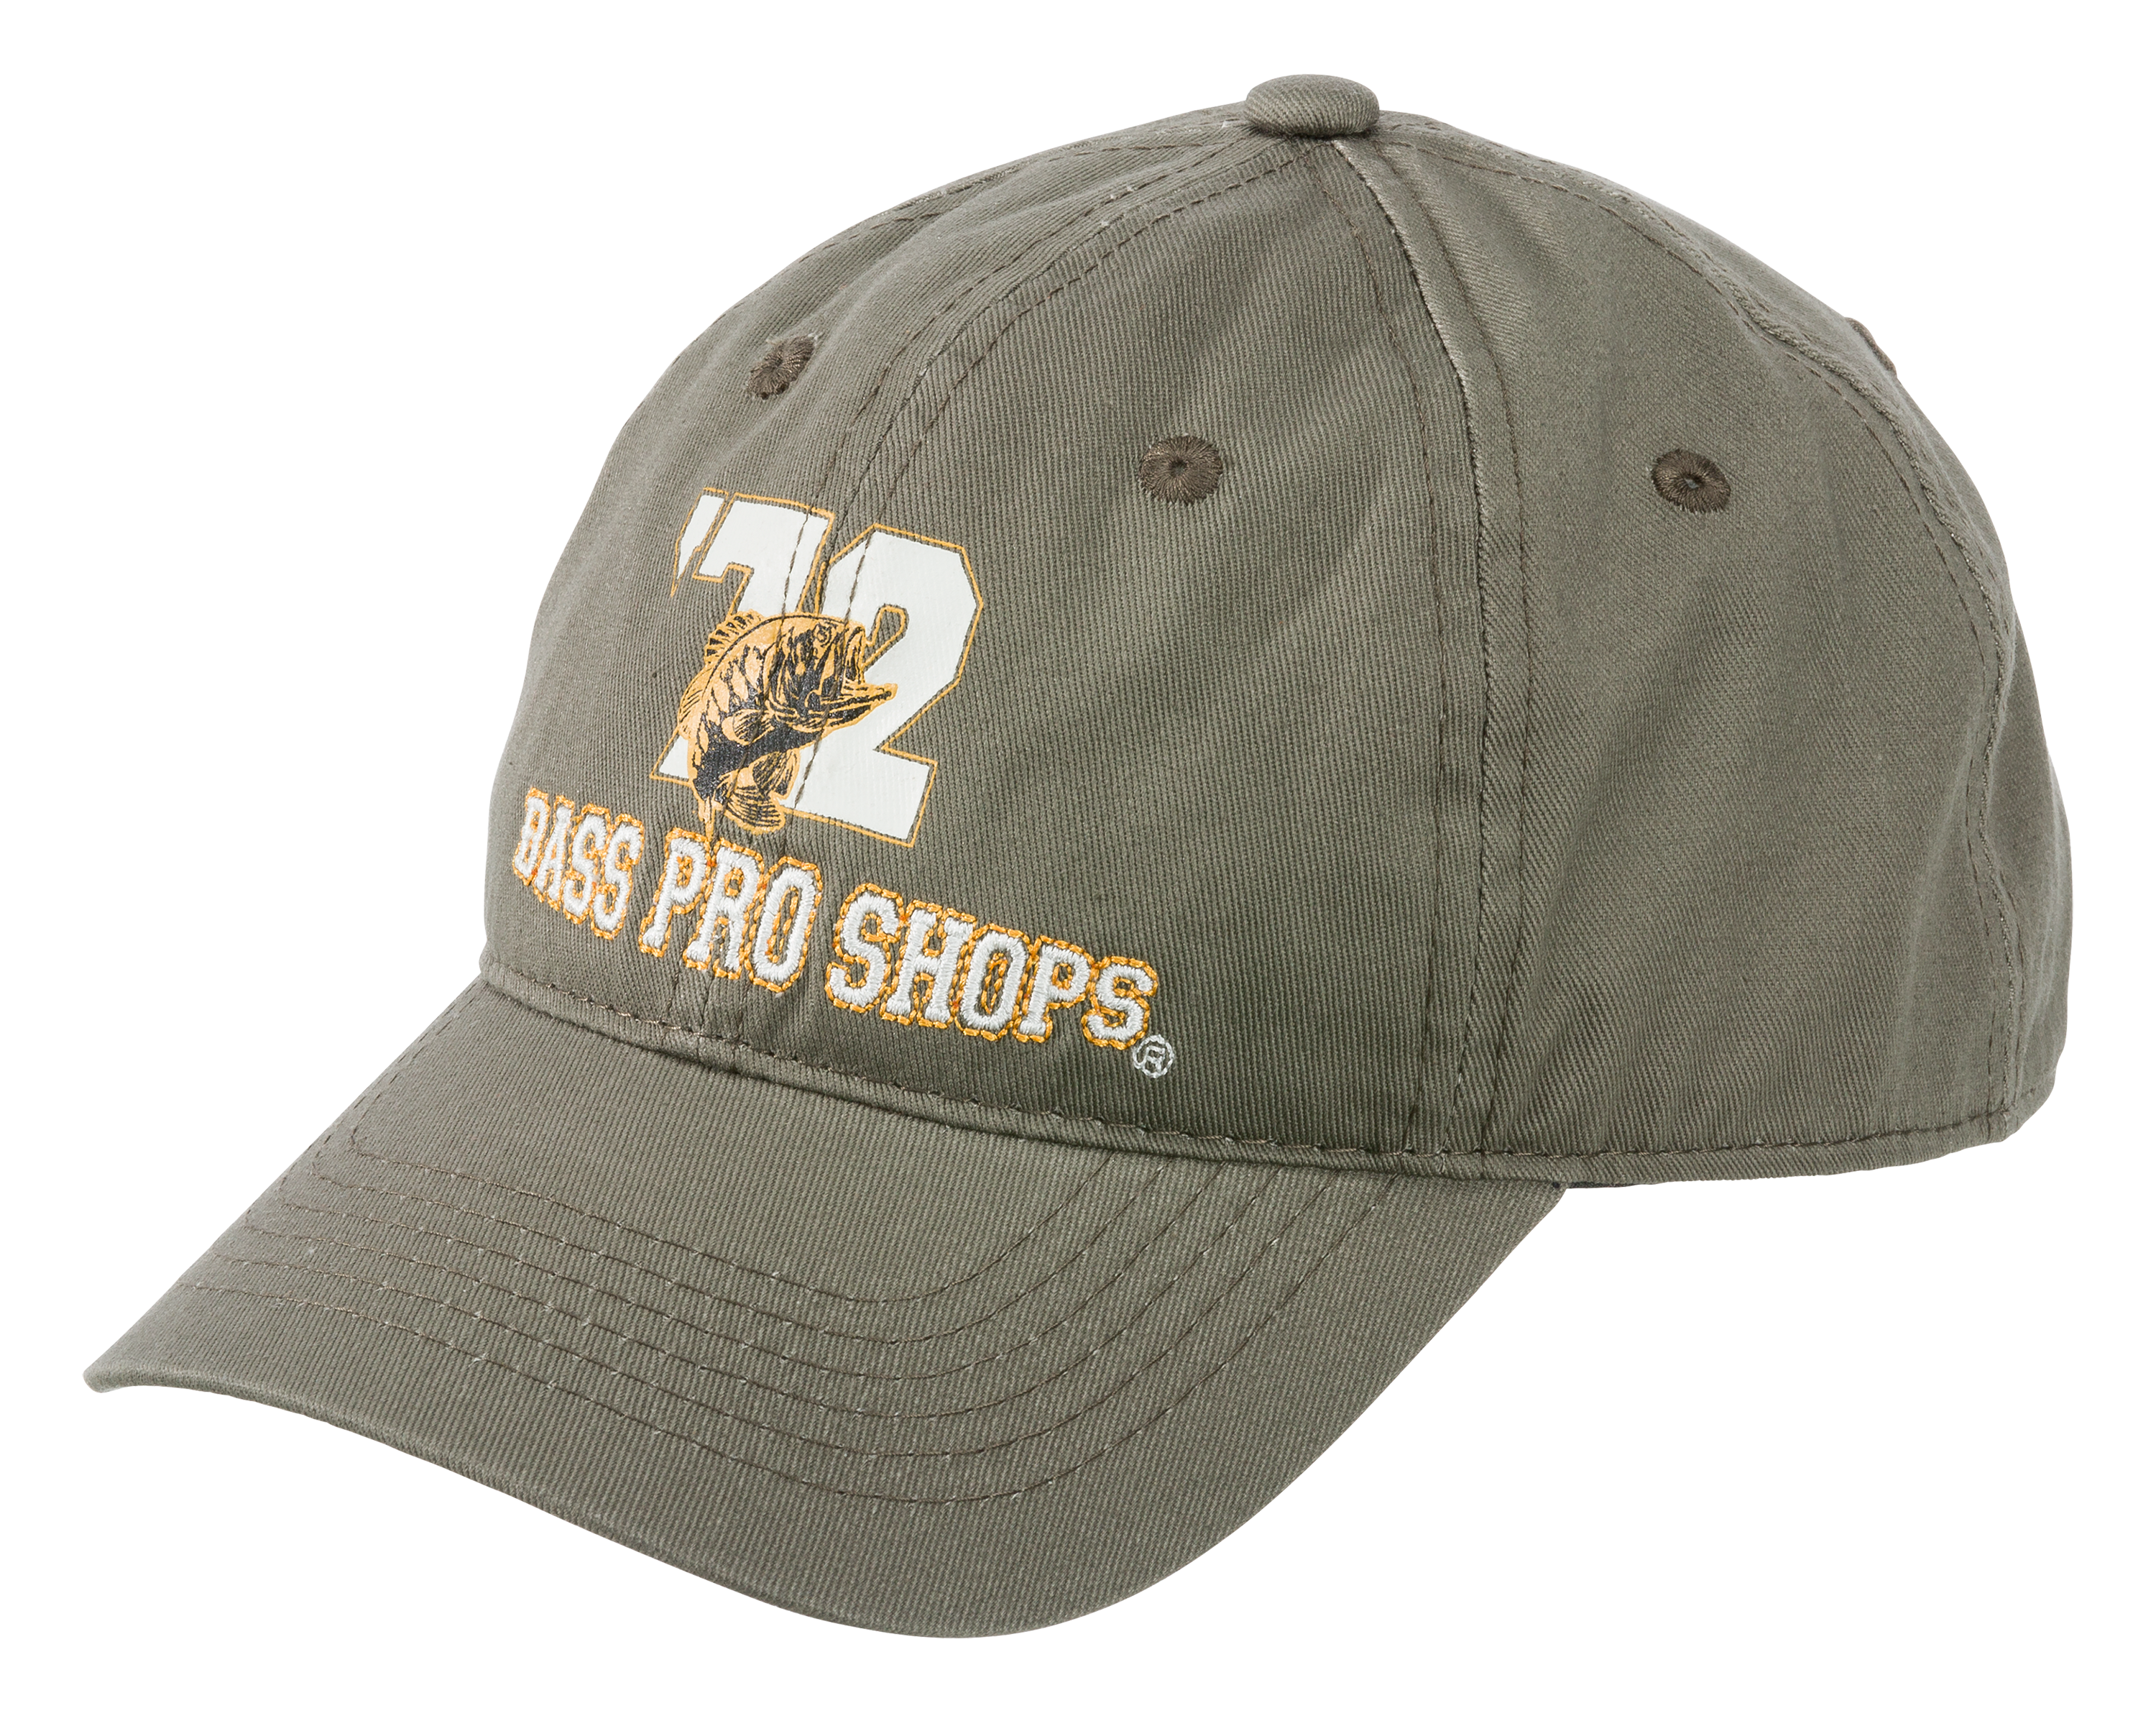 Bass Pro Shops 1972 Outdoors Cap Tan & Black Adjustable Hat - Adjustable  *Read*